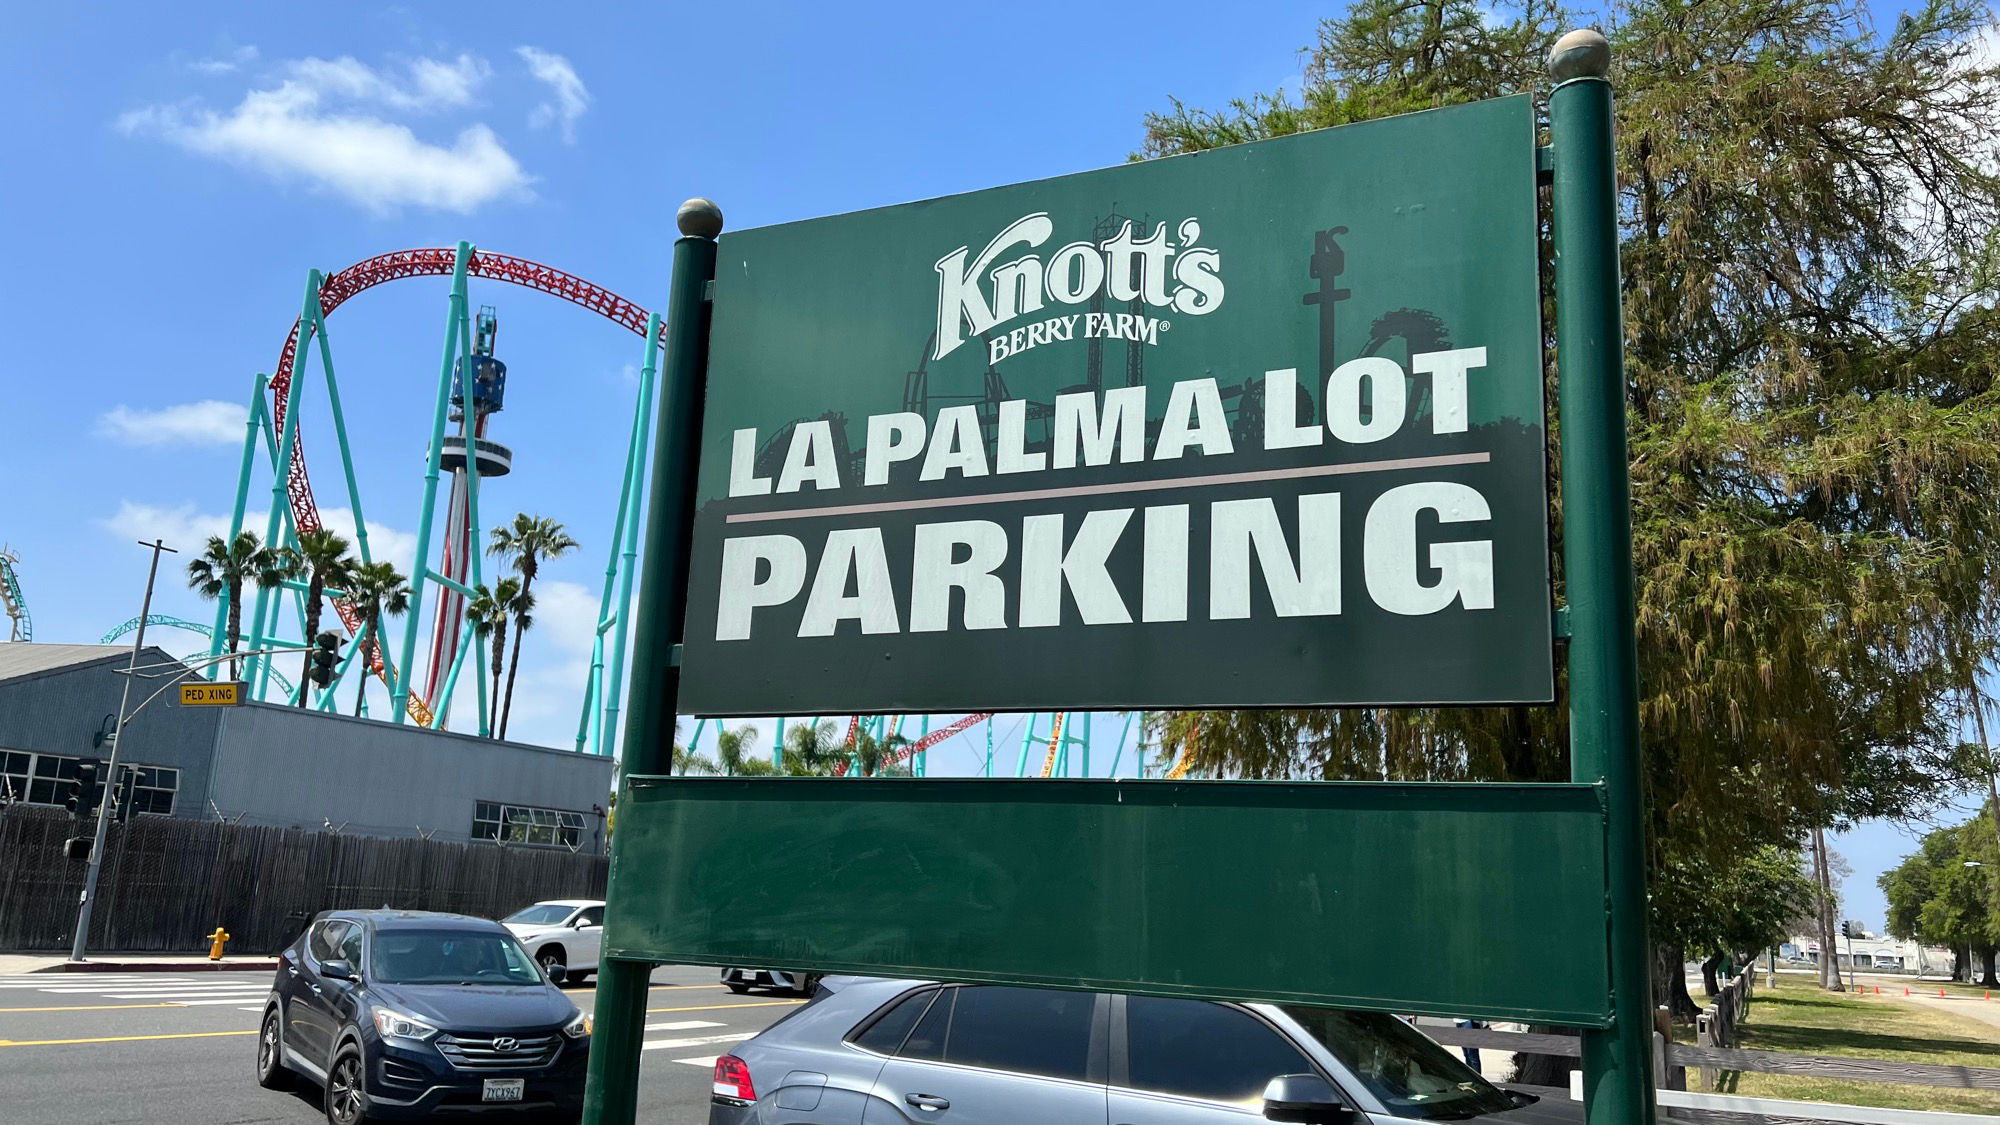 Knott's Berry Farm La Palma Lot